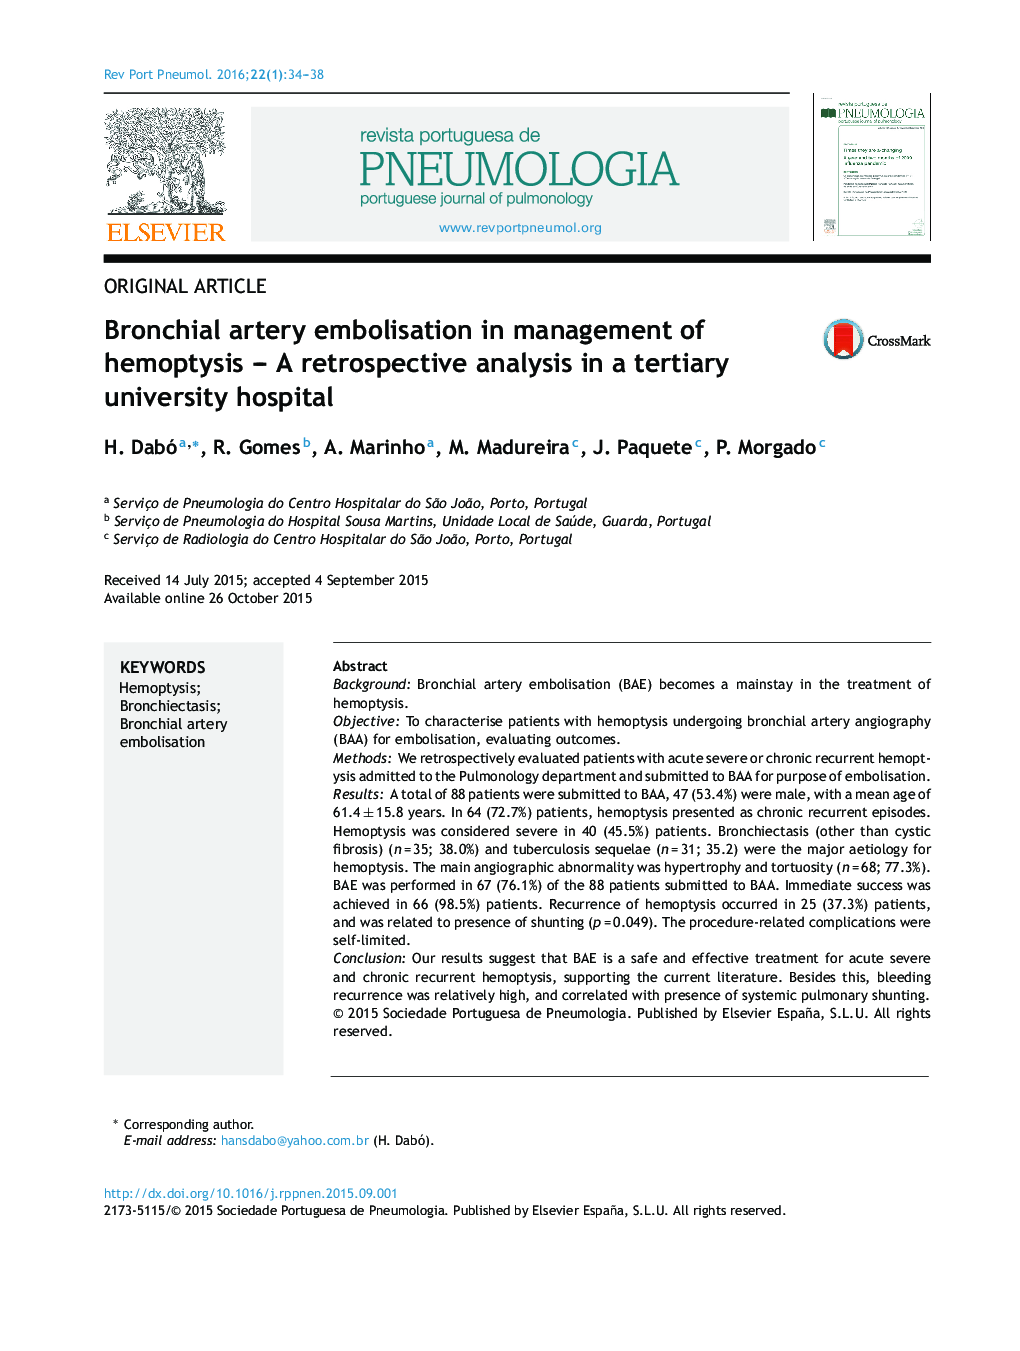 Bronchial artery embolisation in management of hemoptysis – A retrospective analysis in a tertiary university hospital